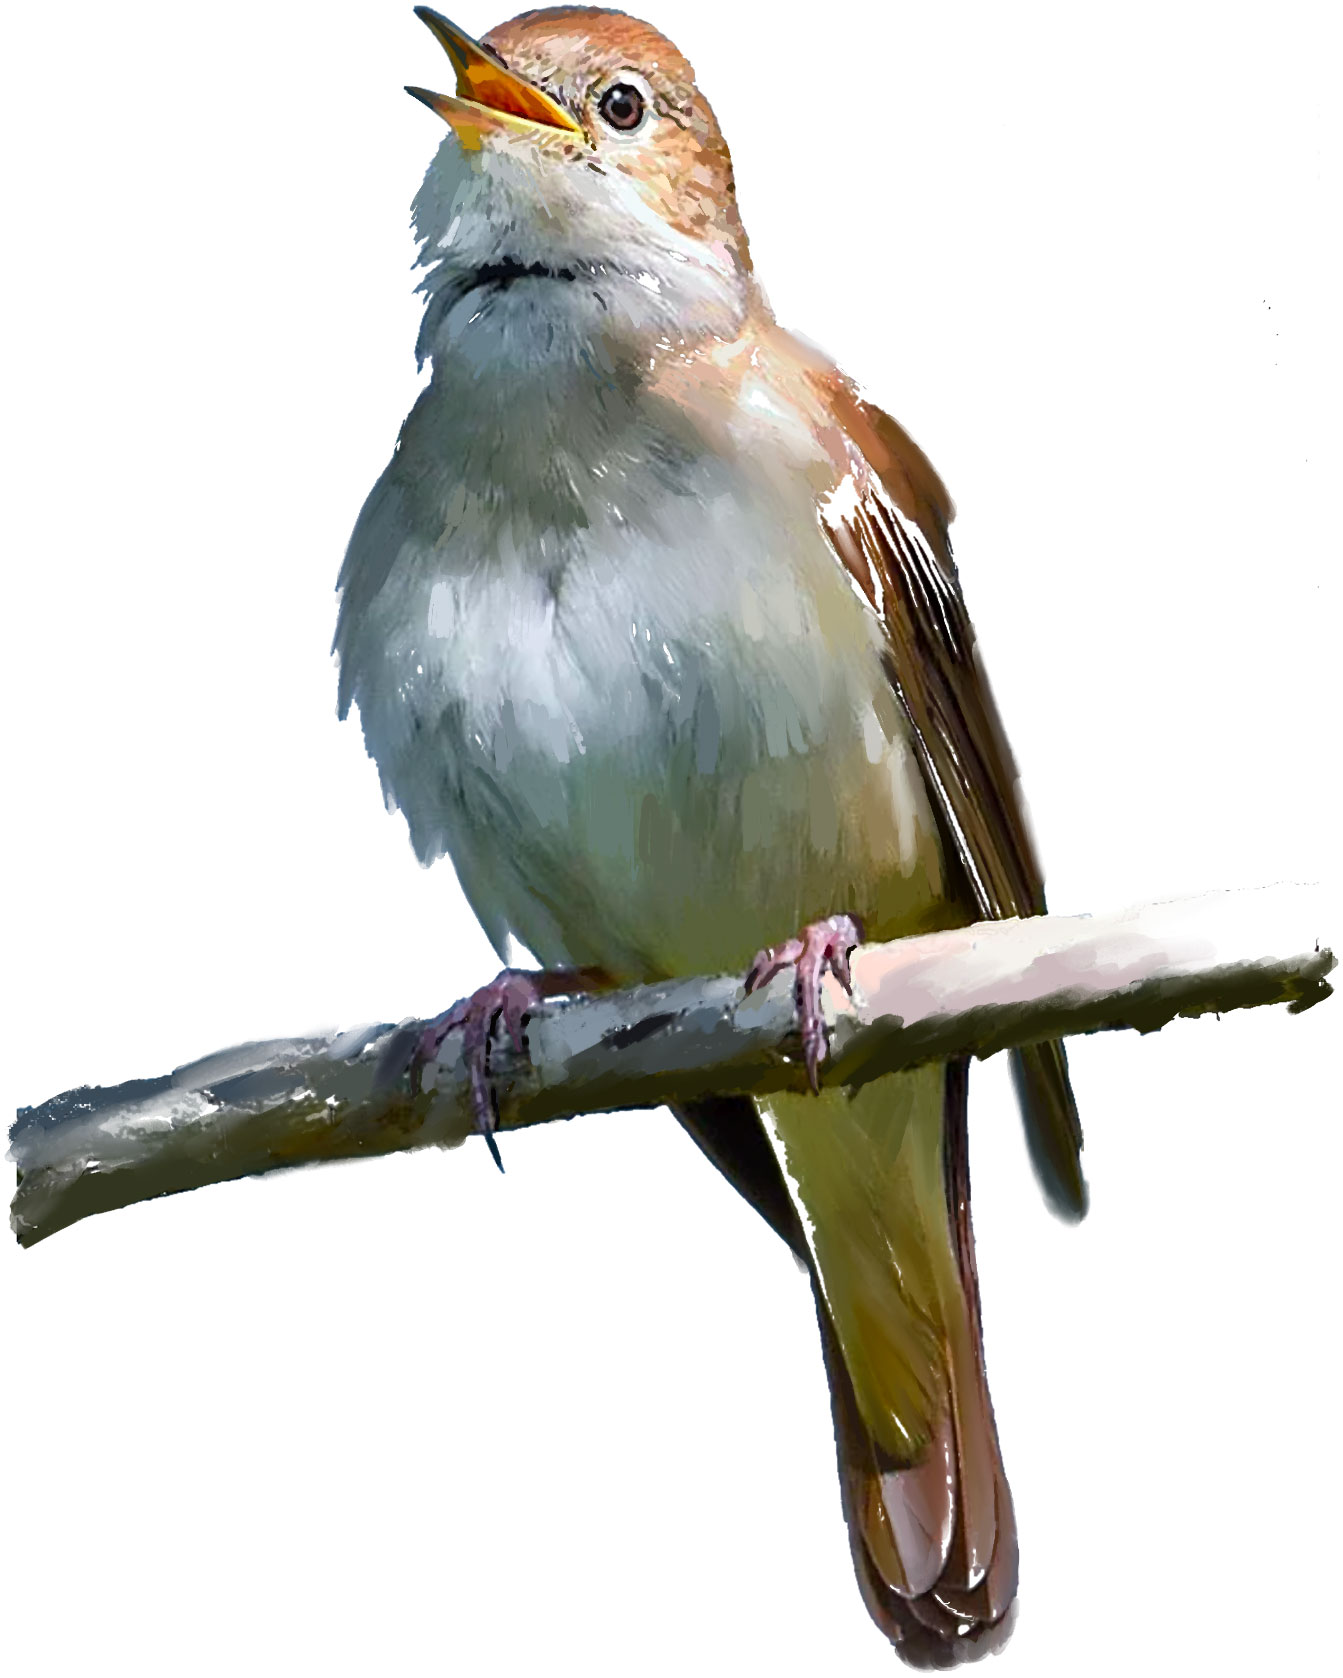 Painting of a Nightingale bird